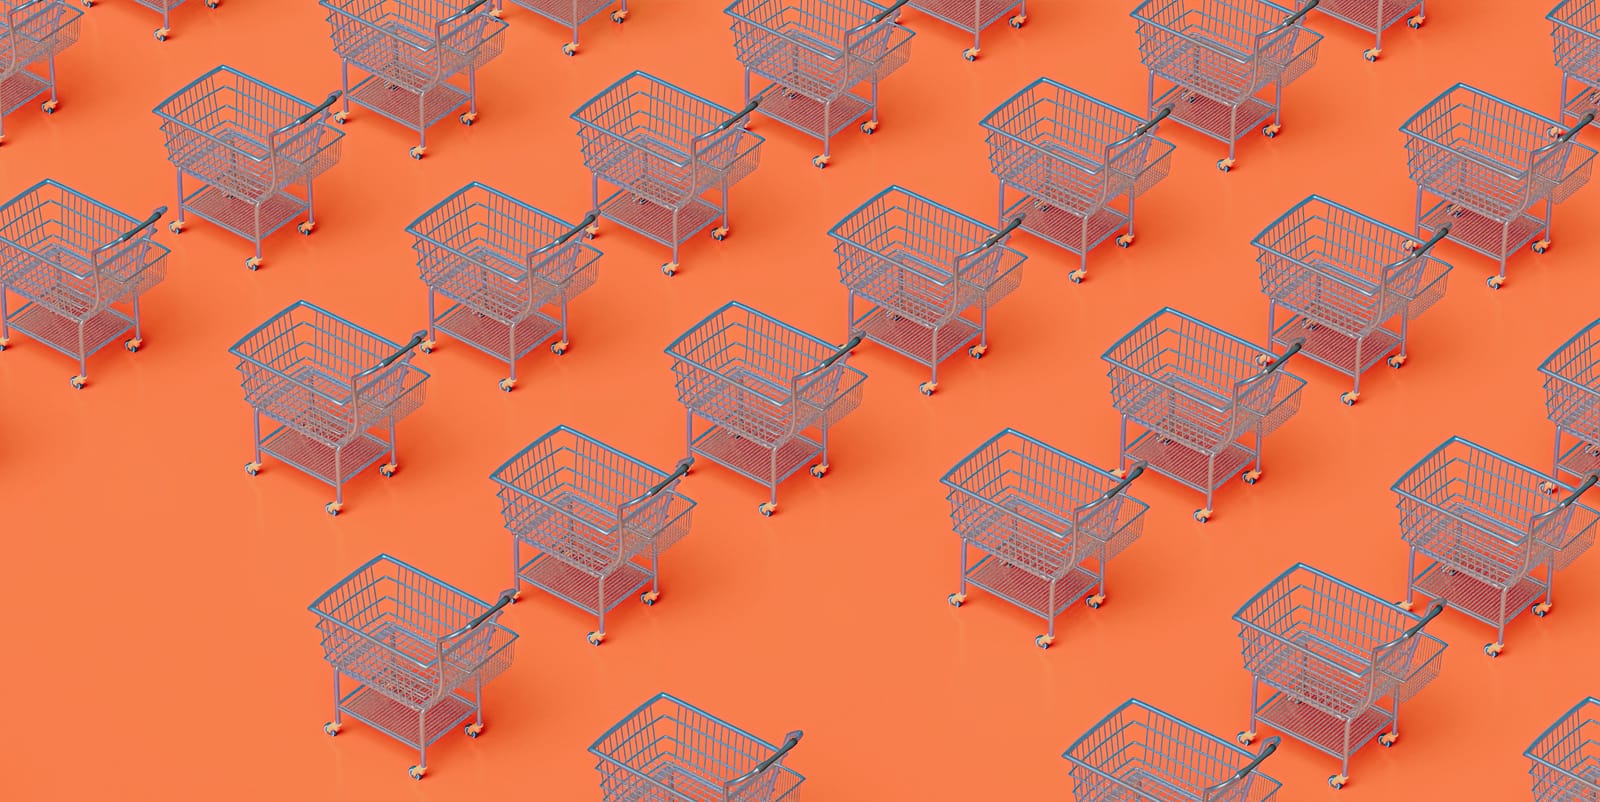 shopping carts in orange wallpaper for social commerce